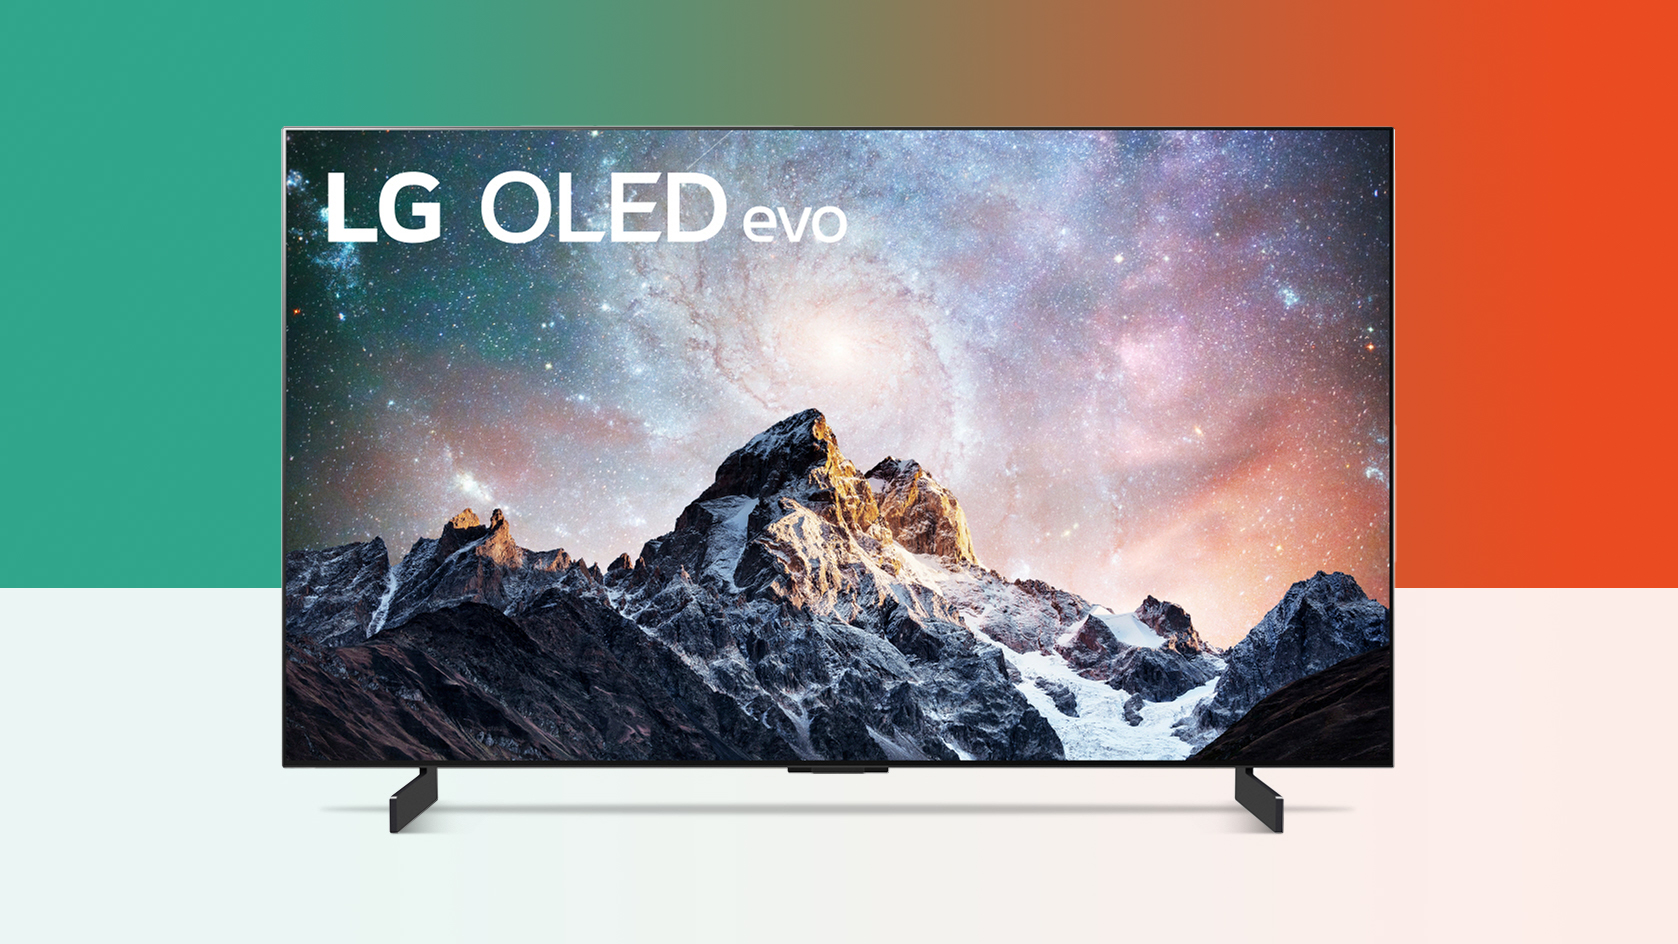 LG OLED TVs - New Vision